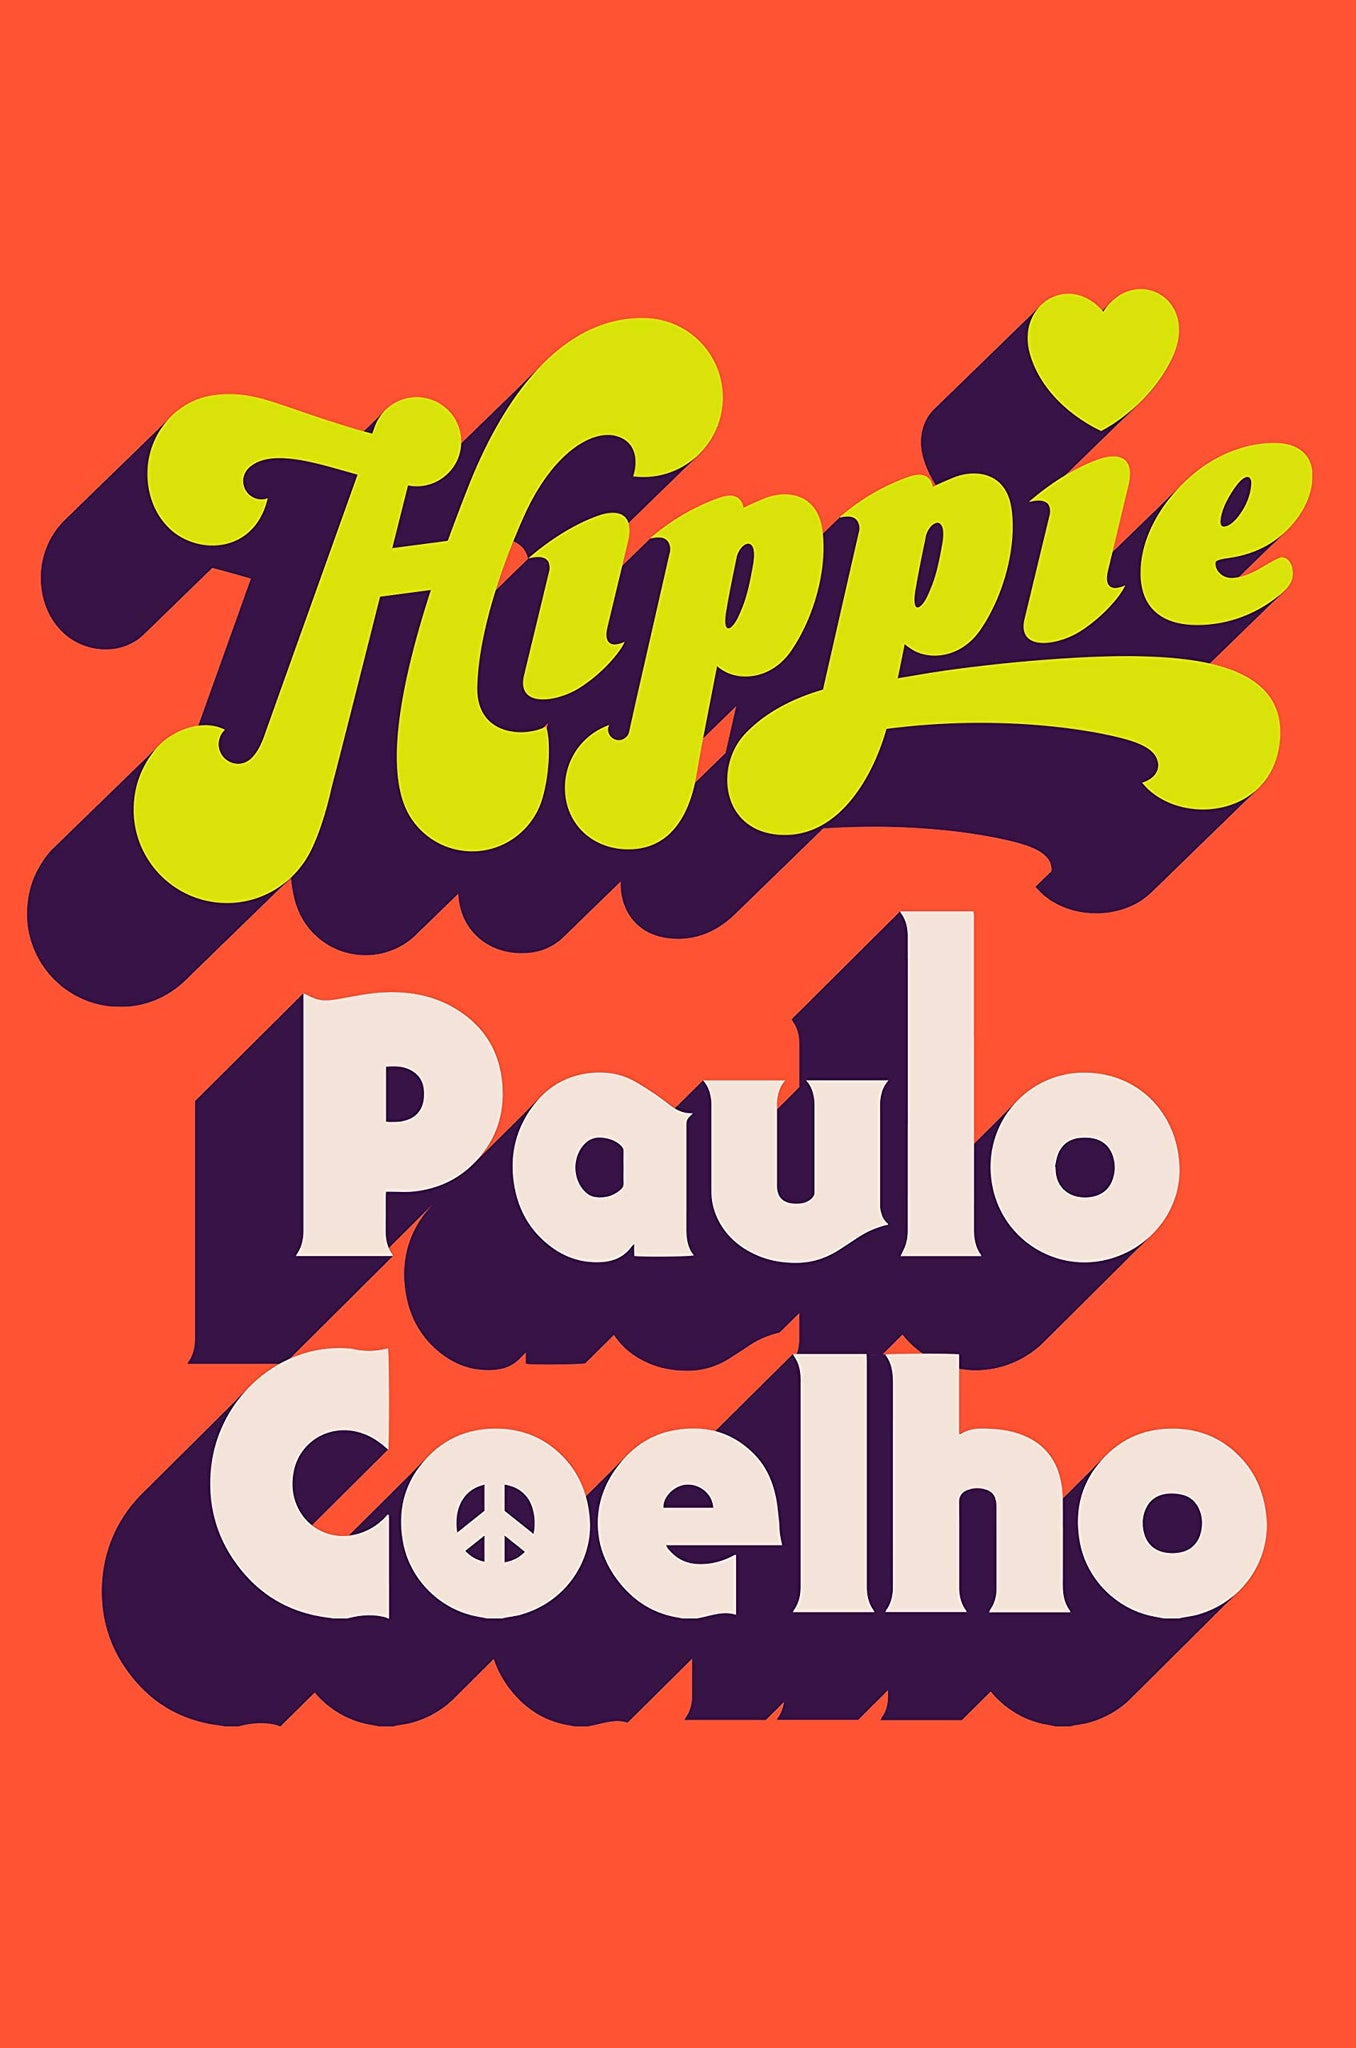 Hippie de Paulo Coelho